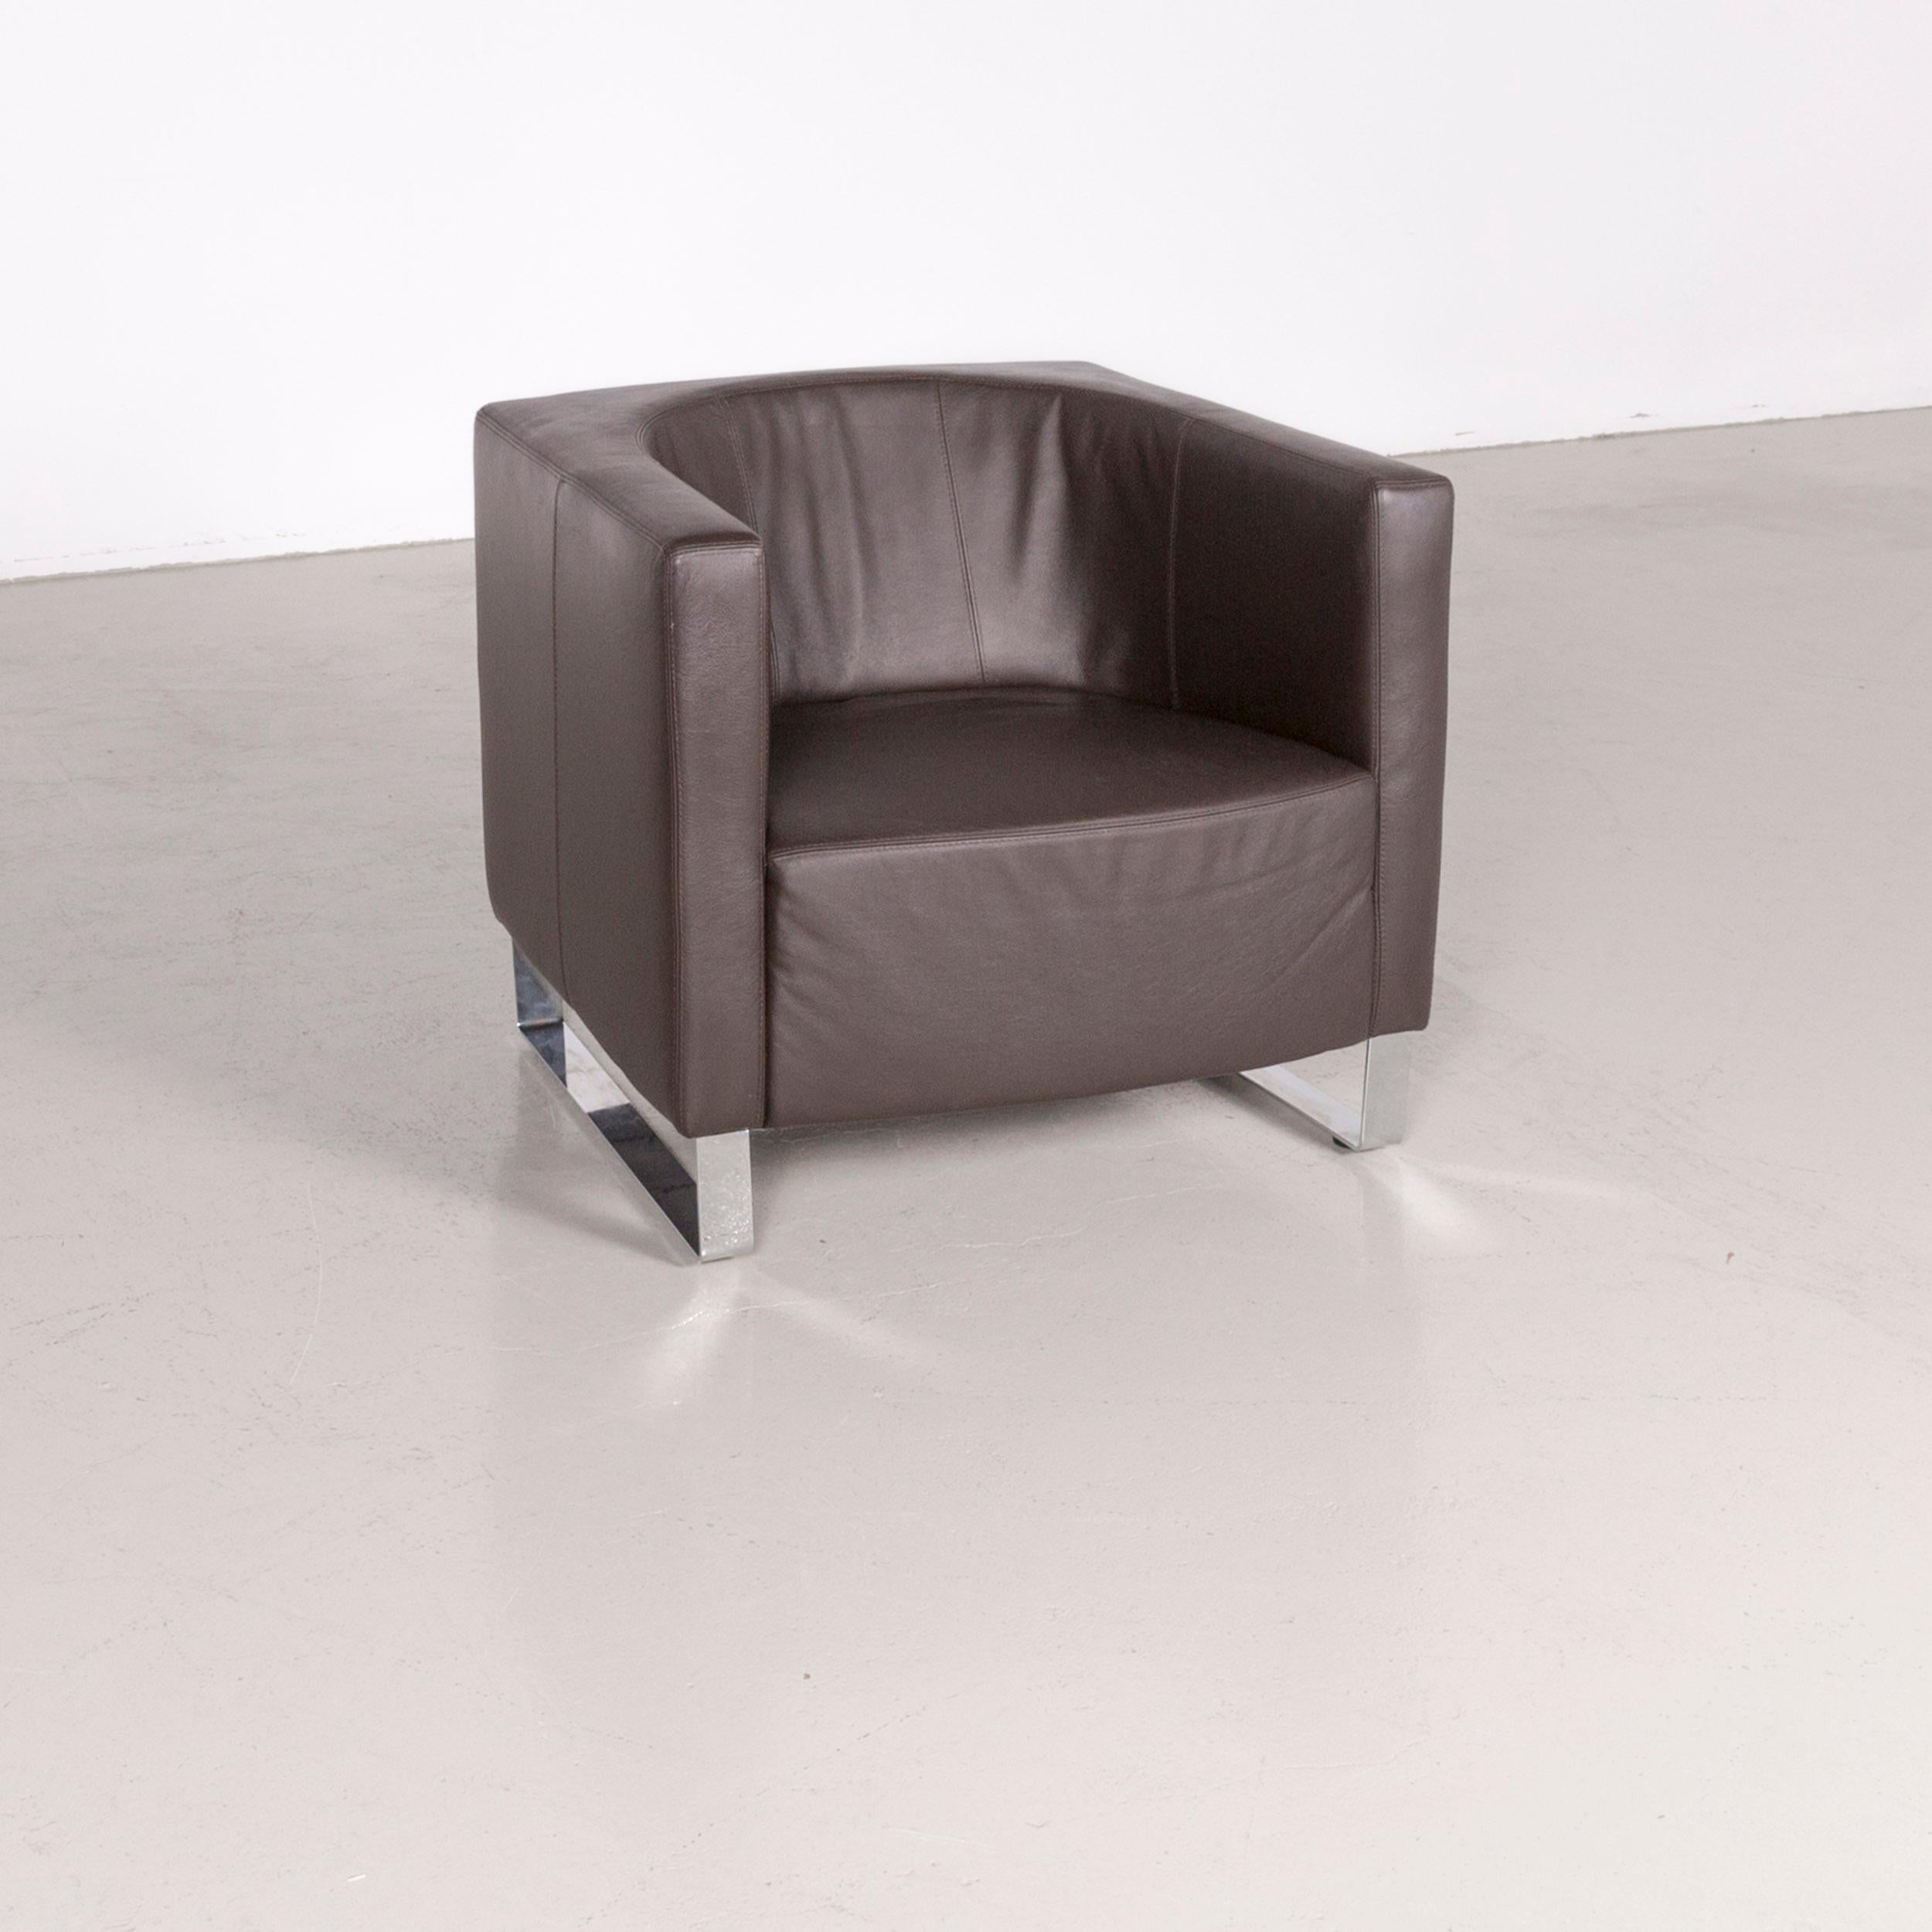 Willi Schillig Taboo designer leather armchair brown.